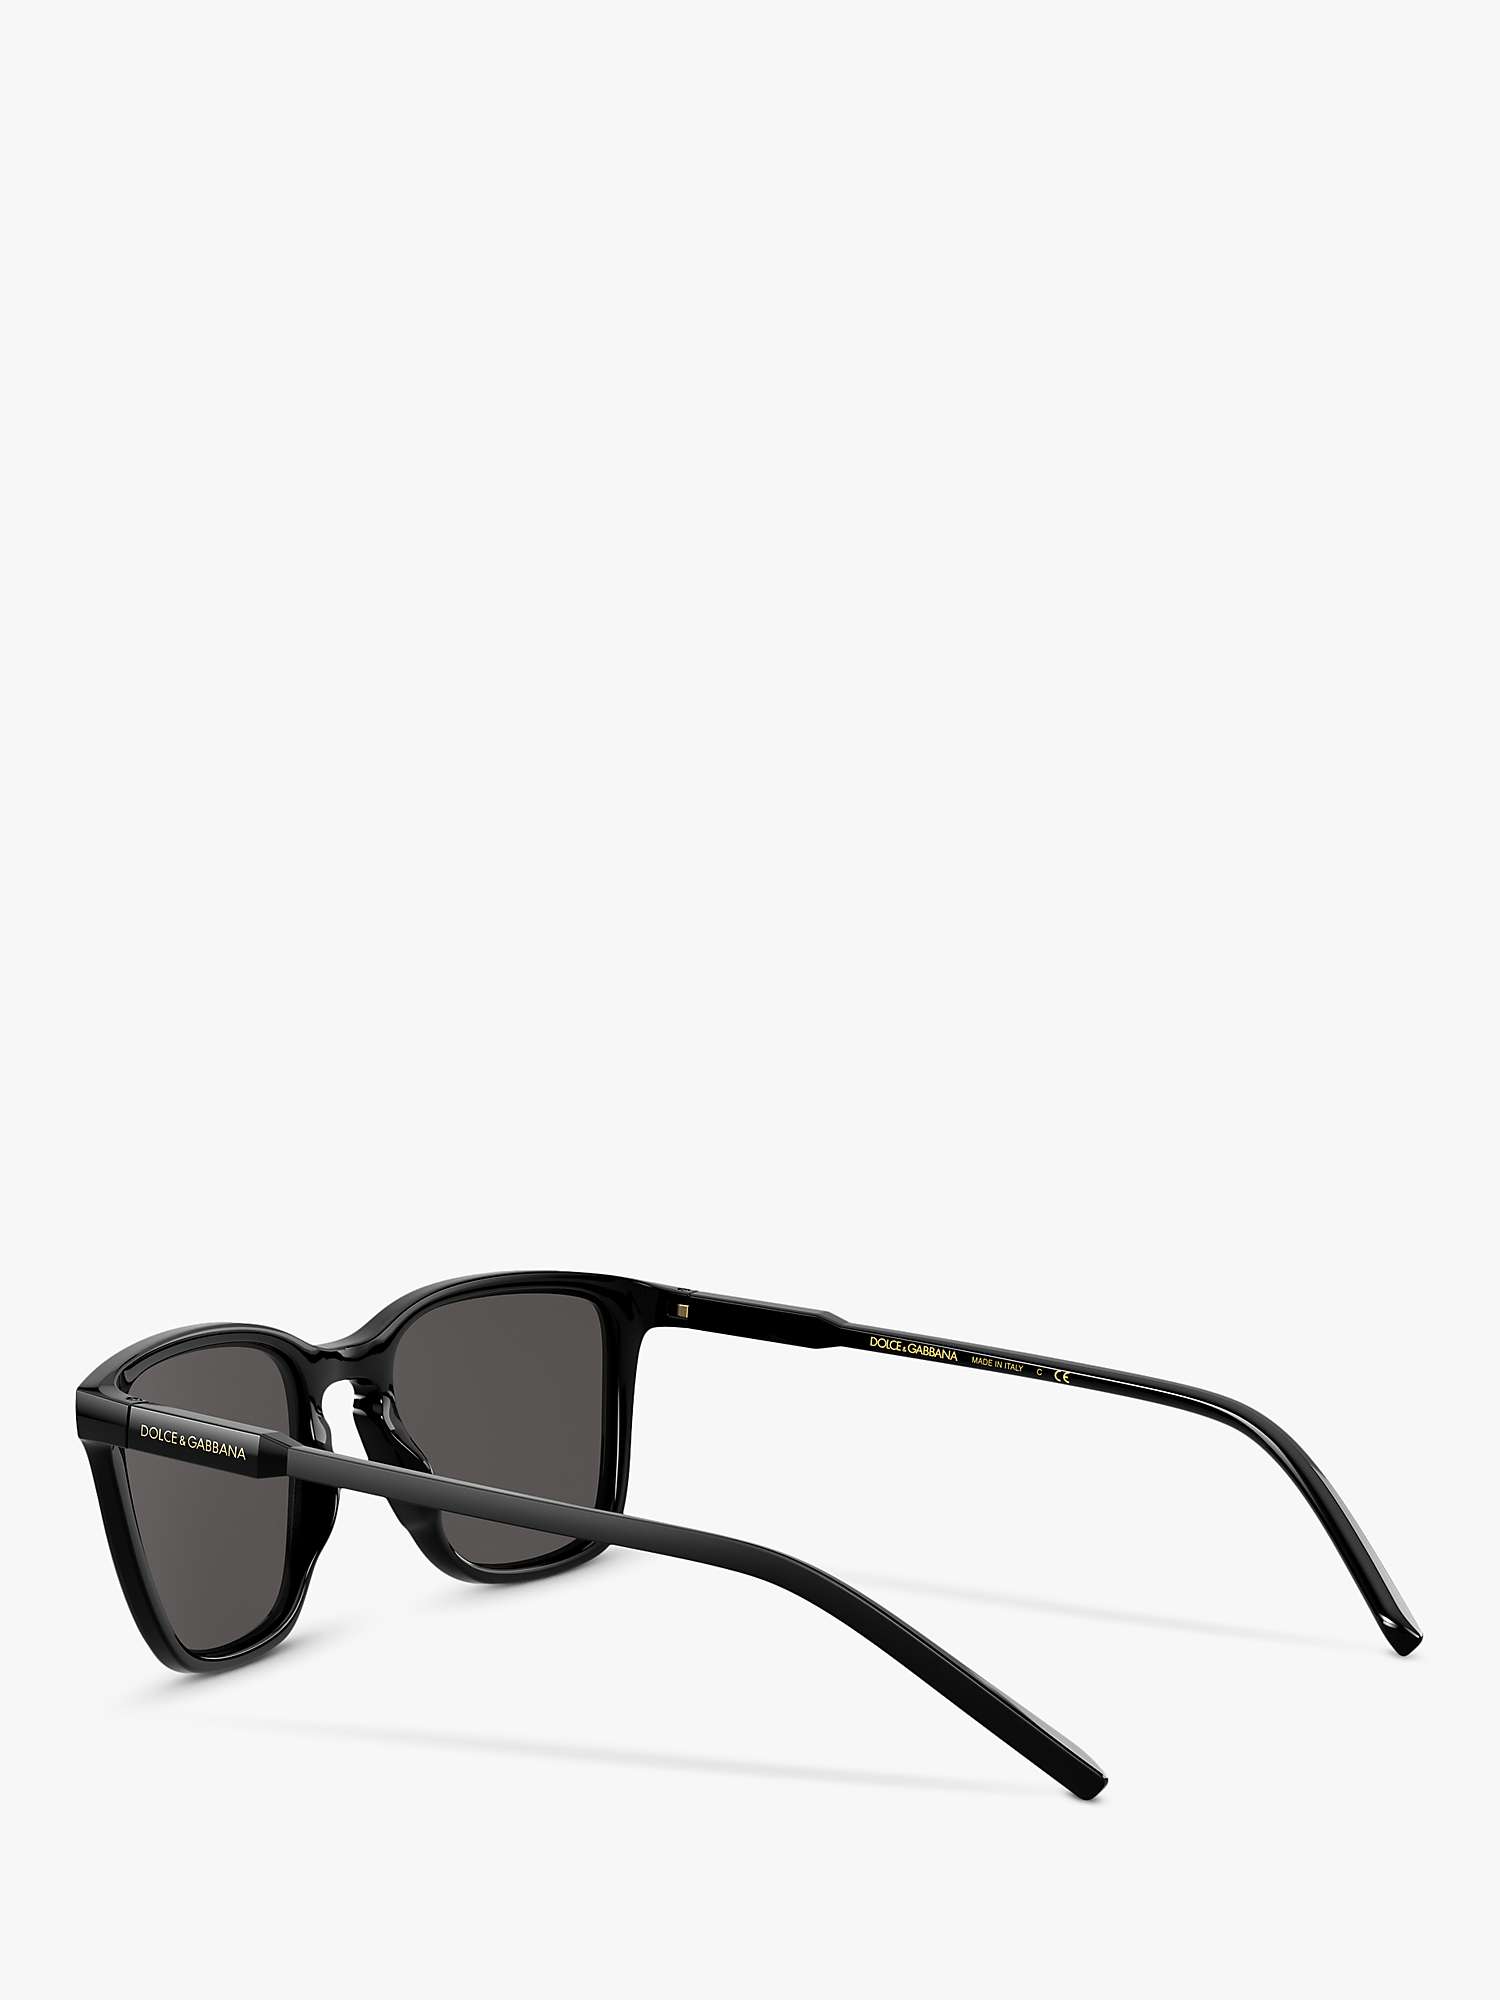 Buy Dolce & Gabbana DG6145 Men's Square Sunglasses Online at johnlewis.com